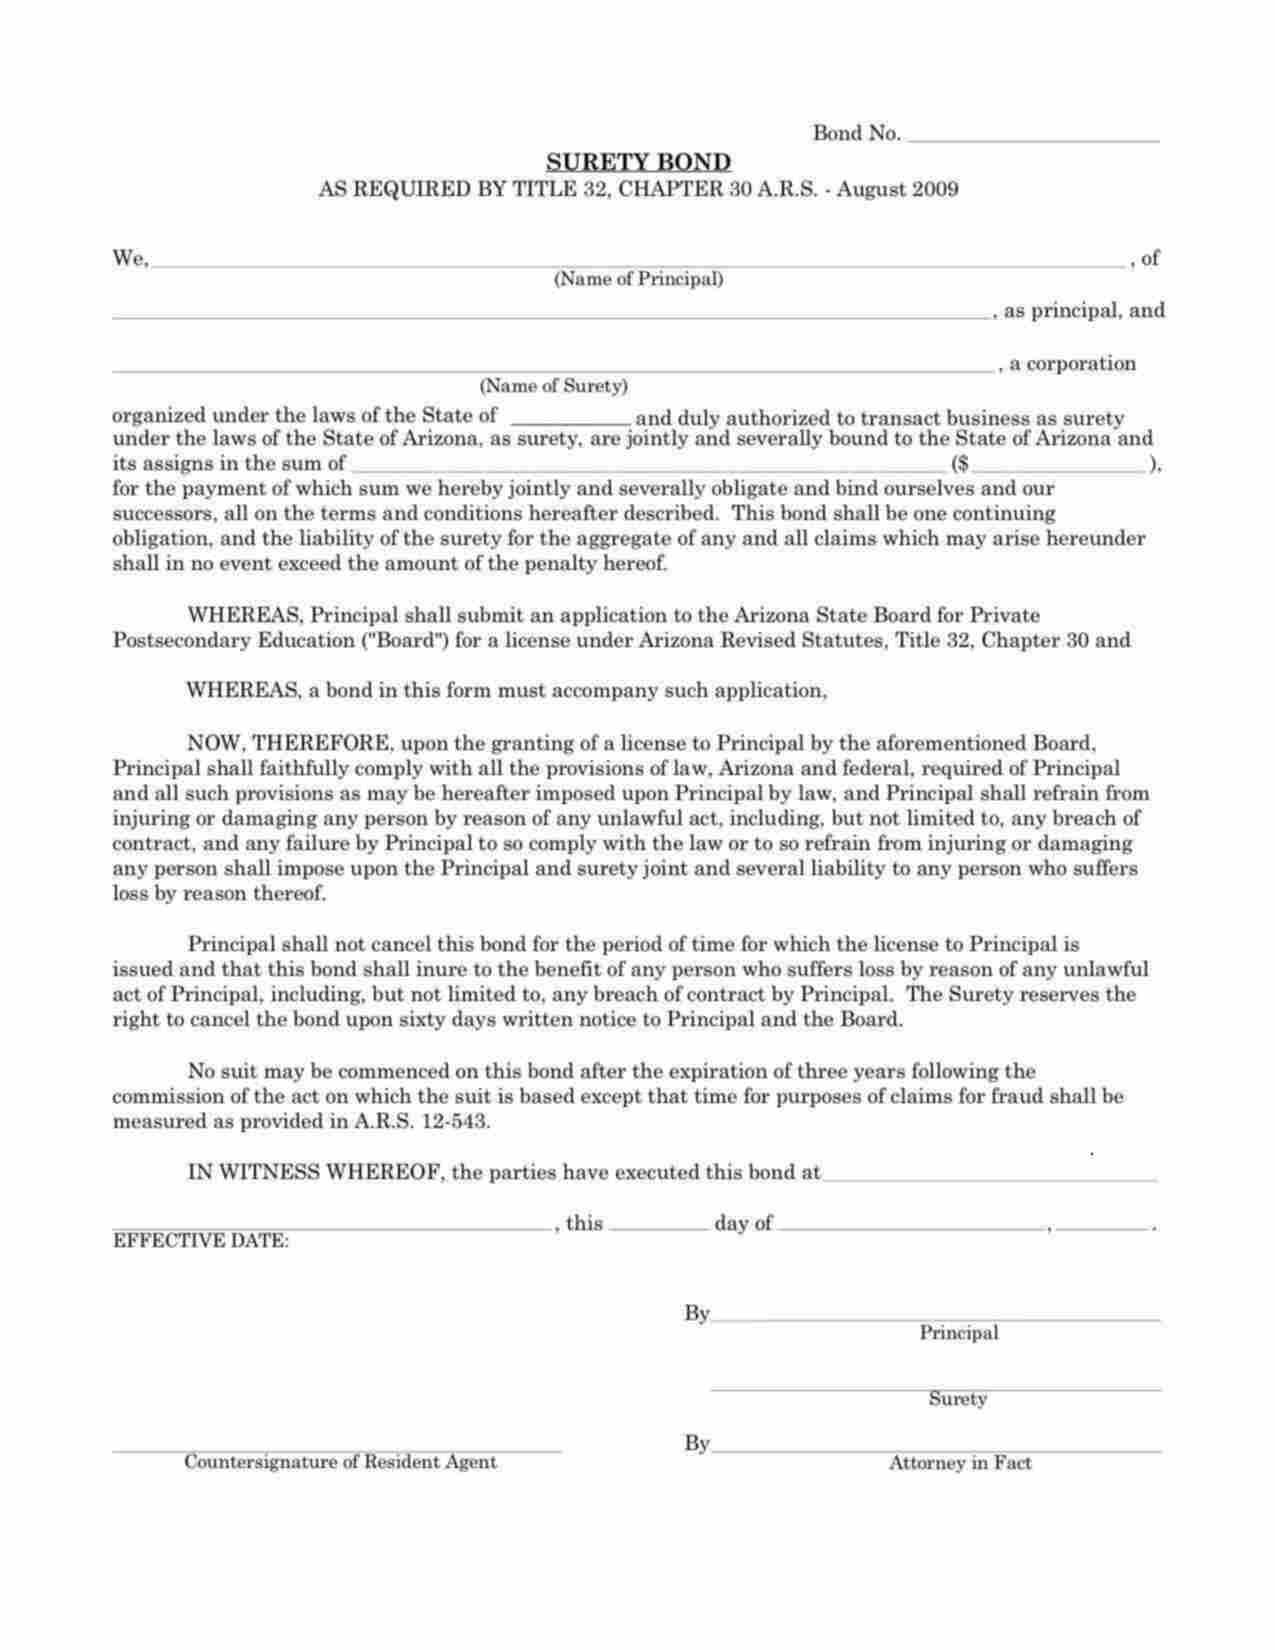 Arizona Private Postsecondary Education Bond Form